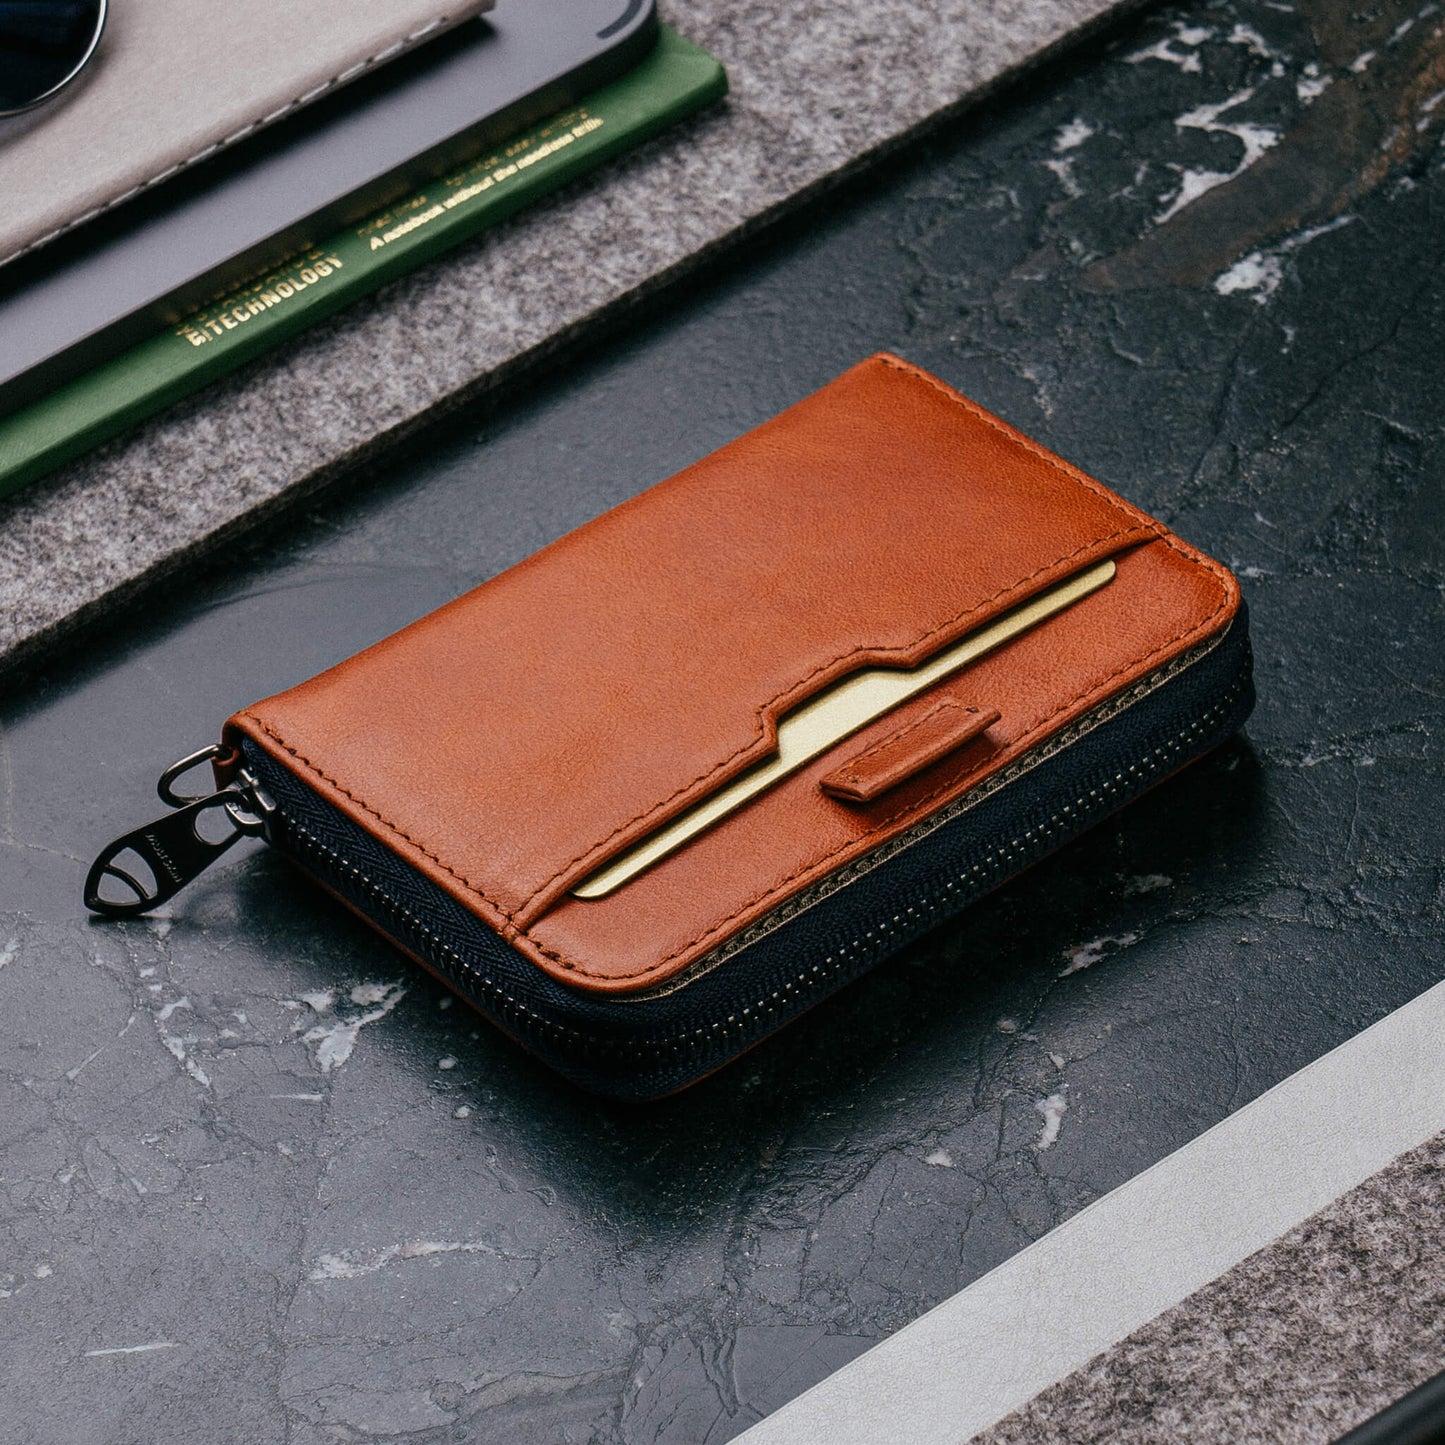 Mayfair leather wallet durability